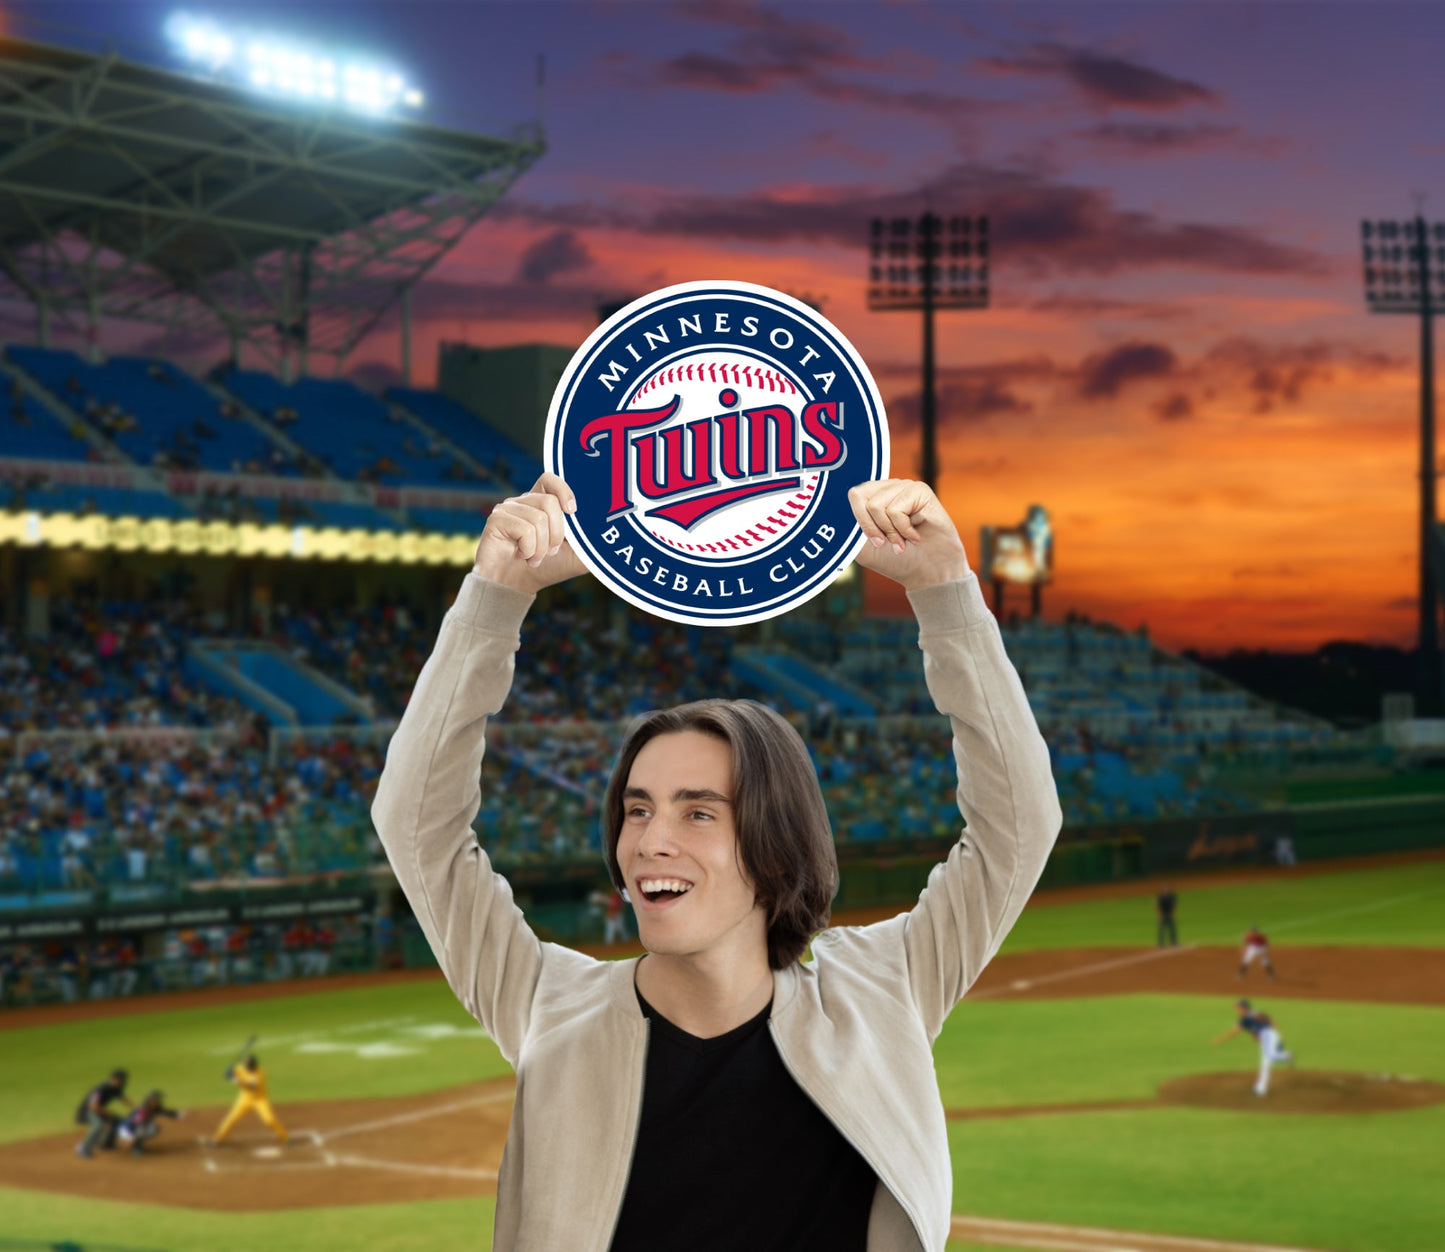 Minnesota Twins: Logo Foam Core Cutout - Officially Licensed MLB Big Head